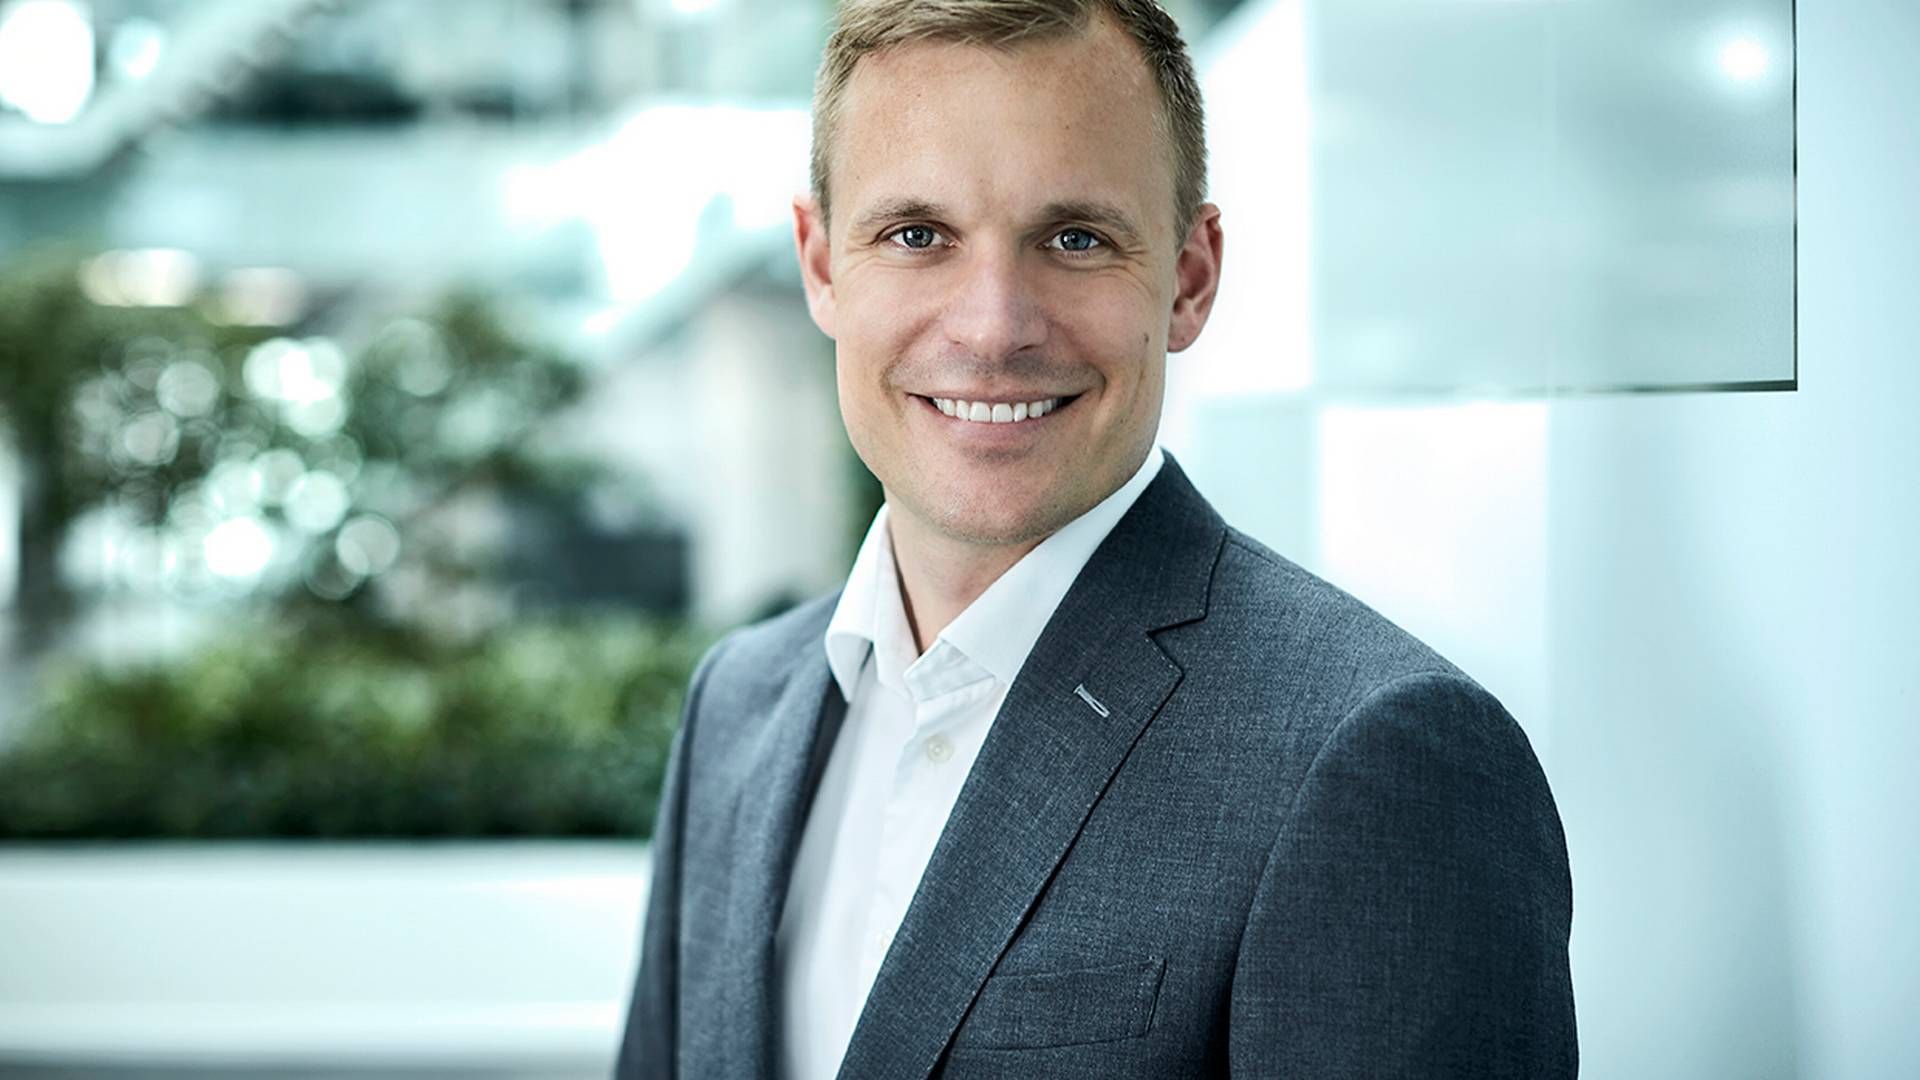 Jesper Johanson, adm. direktør og partner i Incommodities, ser gerne flere ressourcer tilført til det europæiske energimarkedstilsyn Acer. | Foto: Pr / Incommodities